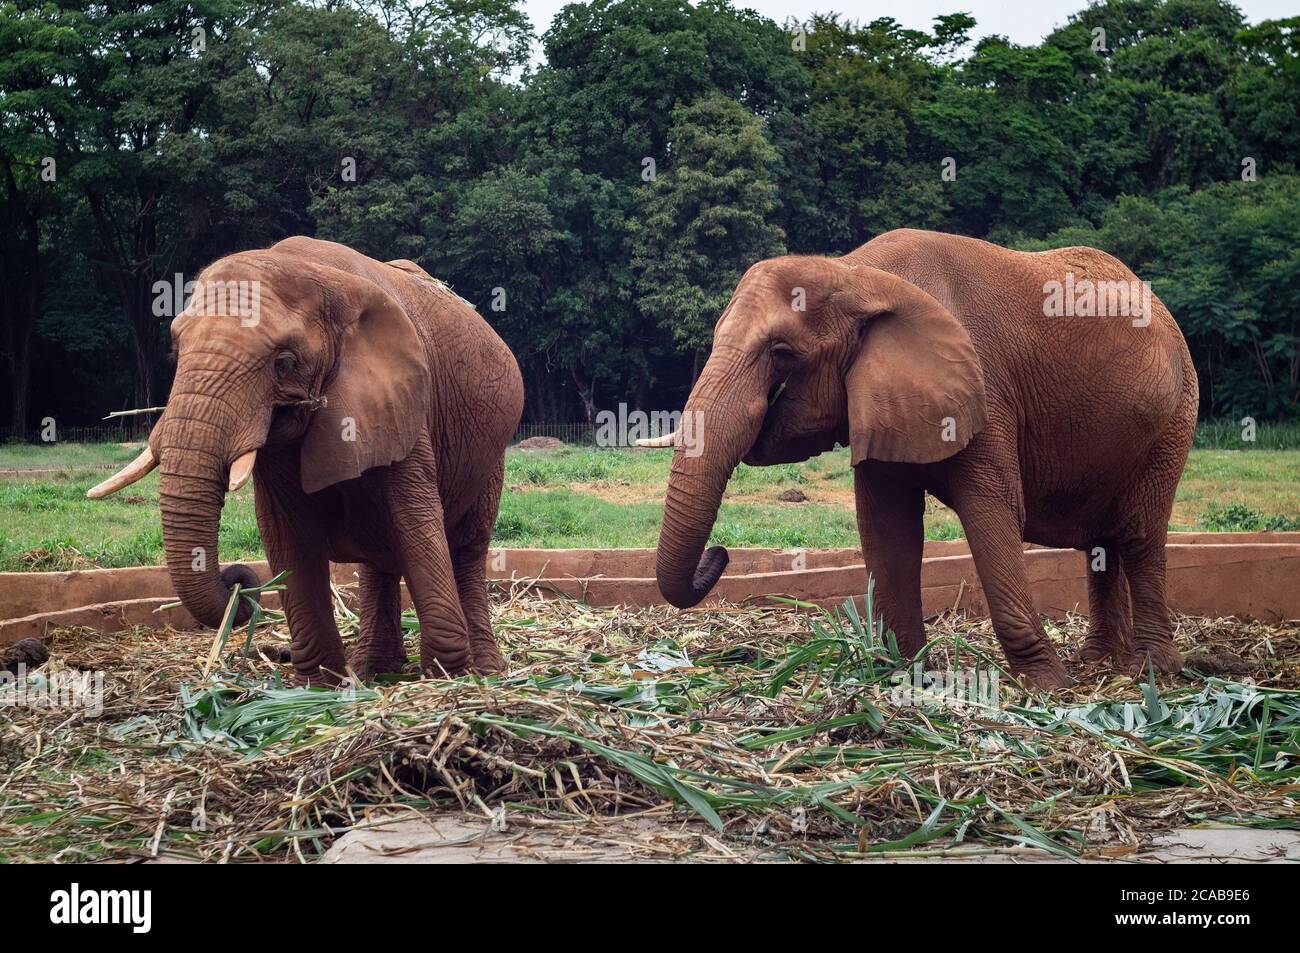 African elephants (Loxodonta - genus comprising two living elephant species) eating inside his animal enclosure in Belo Horizonte zoological park. Stock Photo